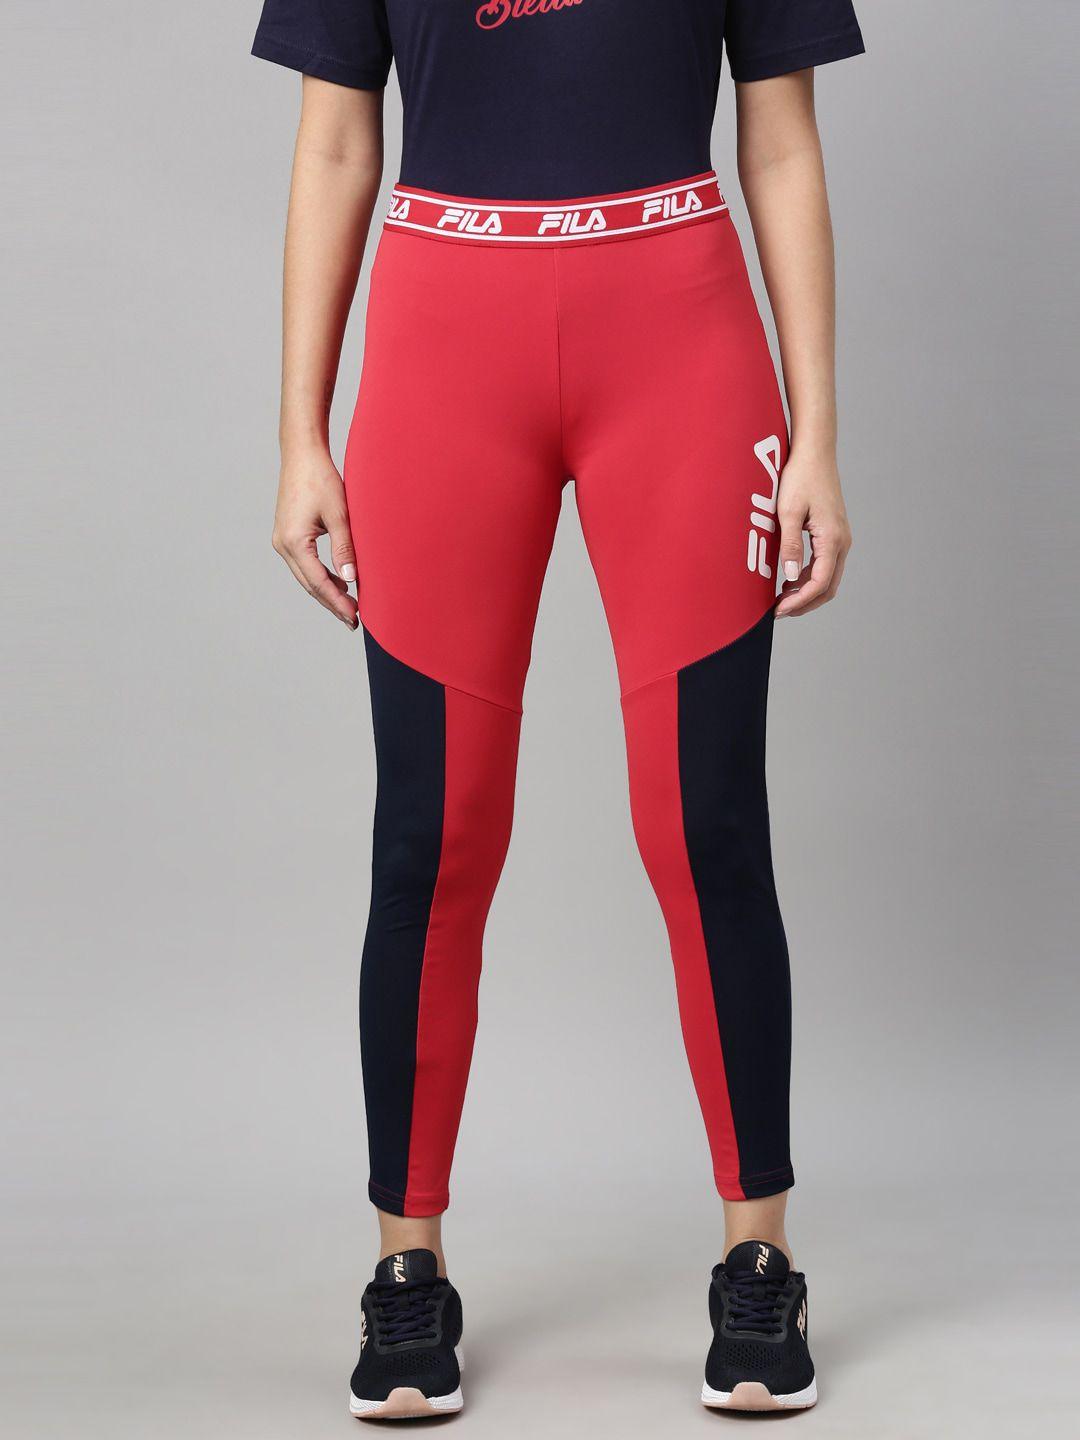 fila women red & navy blue colorblocked slim fit track pants